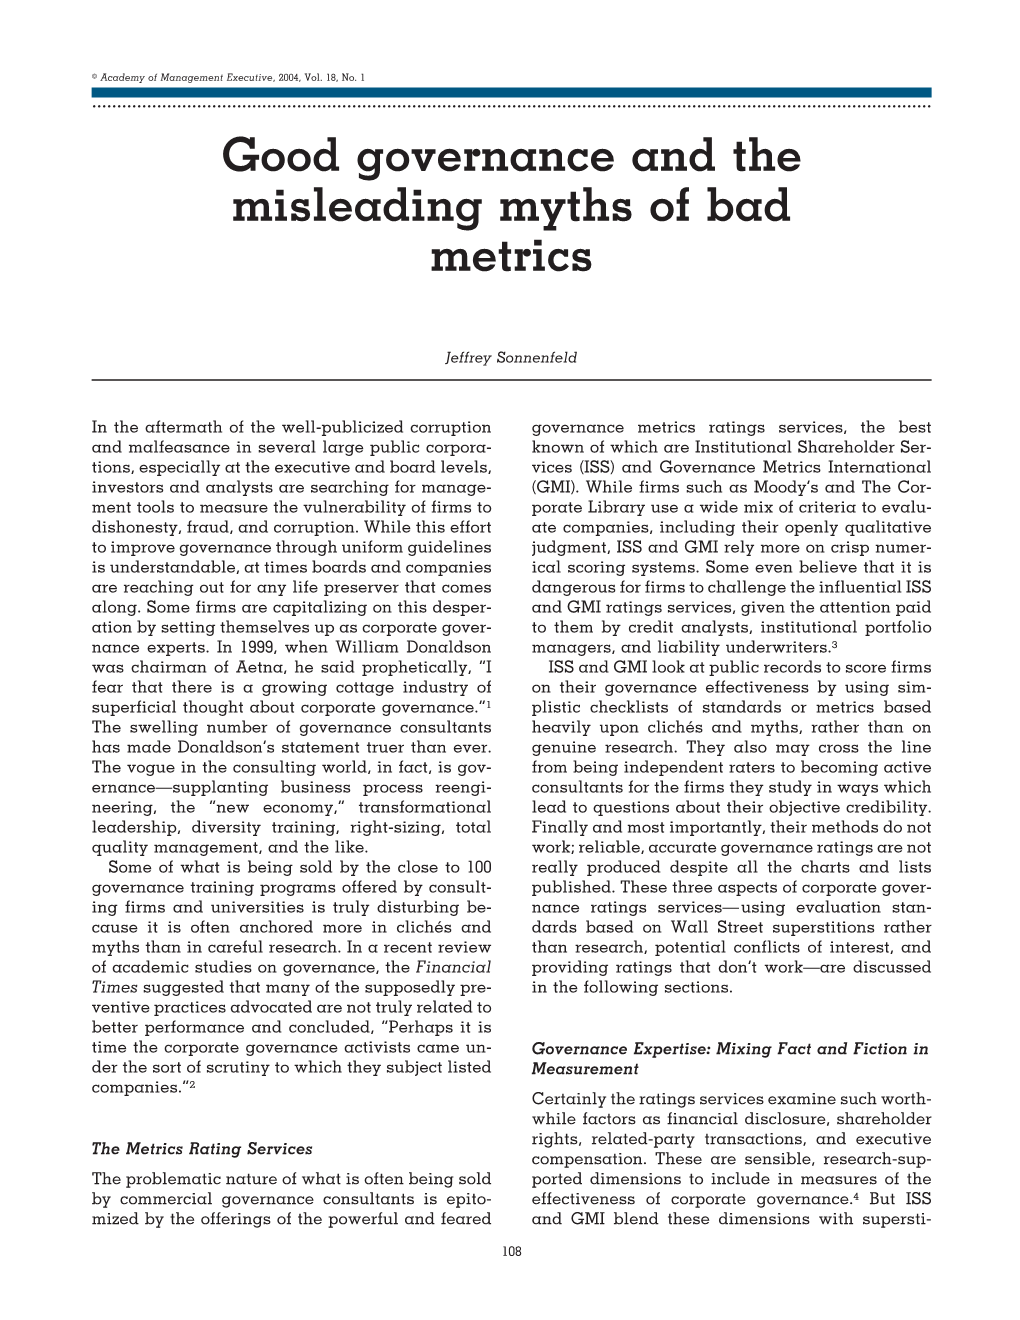 Good Governance and the Misleading Myths of Bad Metrics